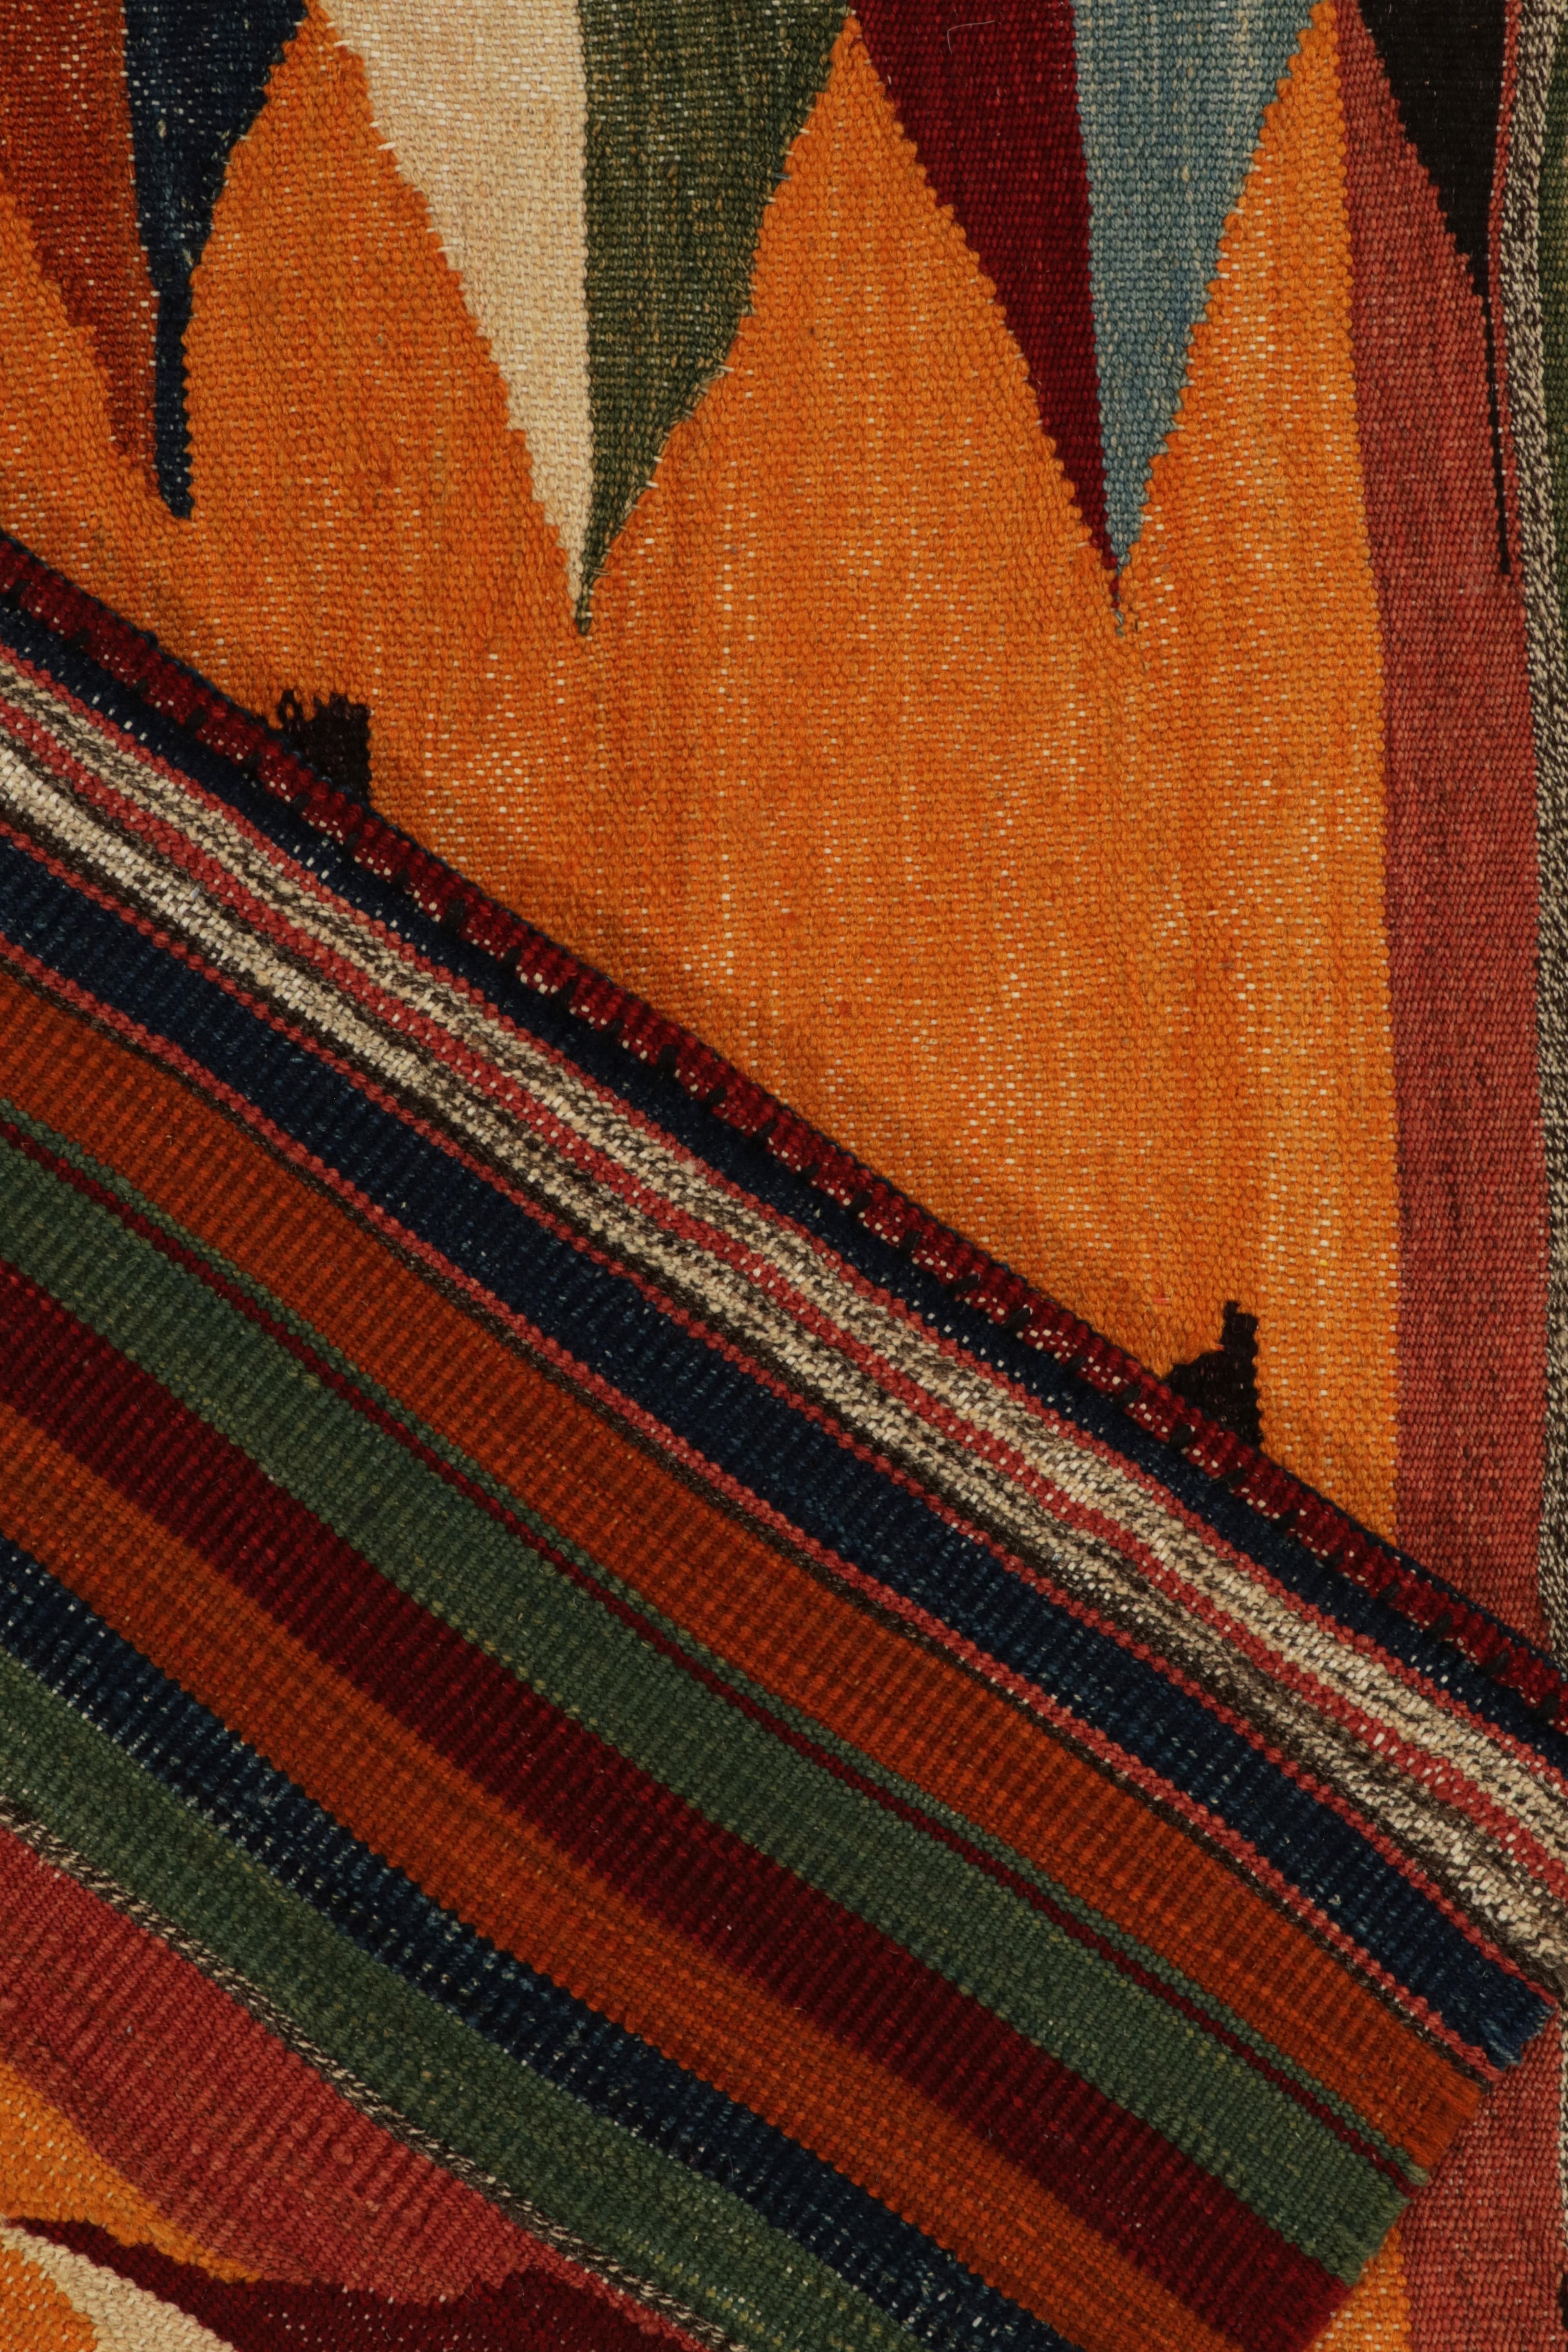 Late 20th Century 1980s Vintage Sofreh Kilim Rug in Orange Tribal Stripe Patterns by Rug & Kilim For Sale